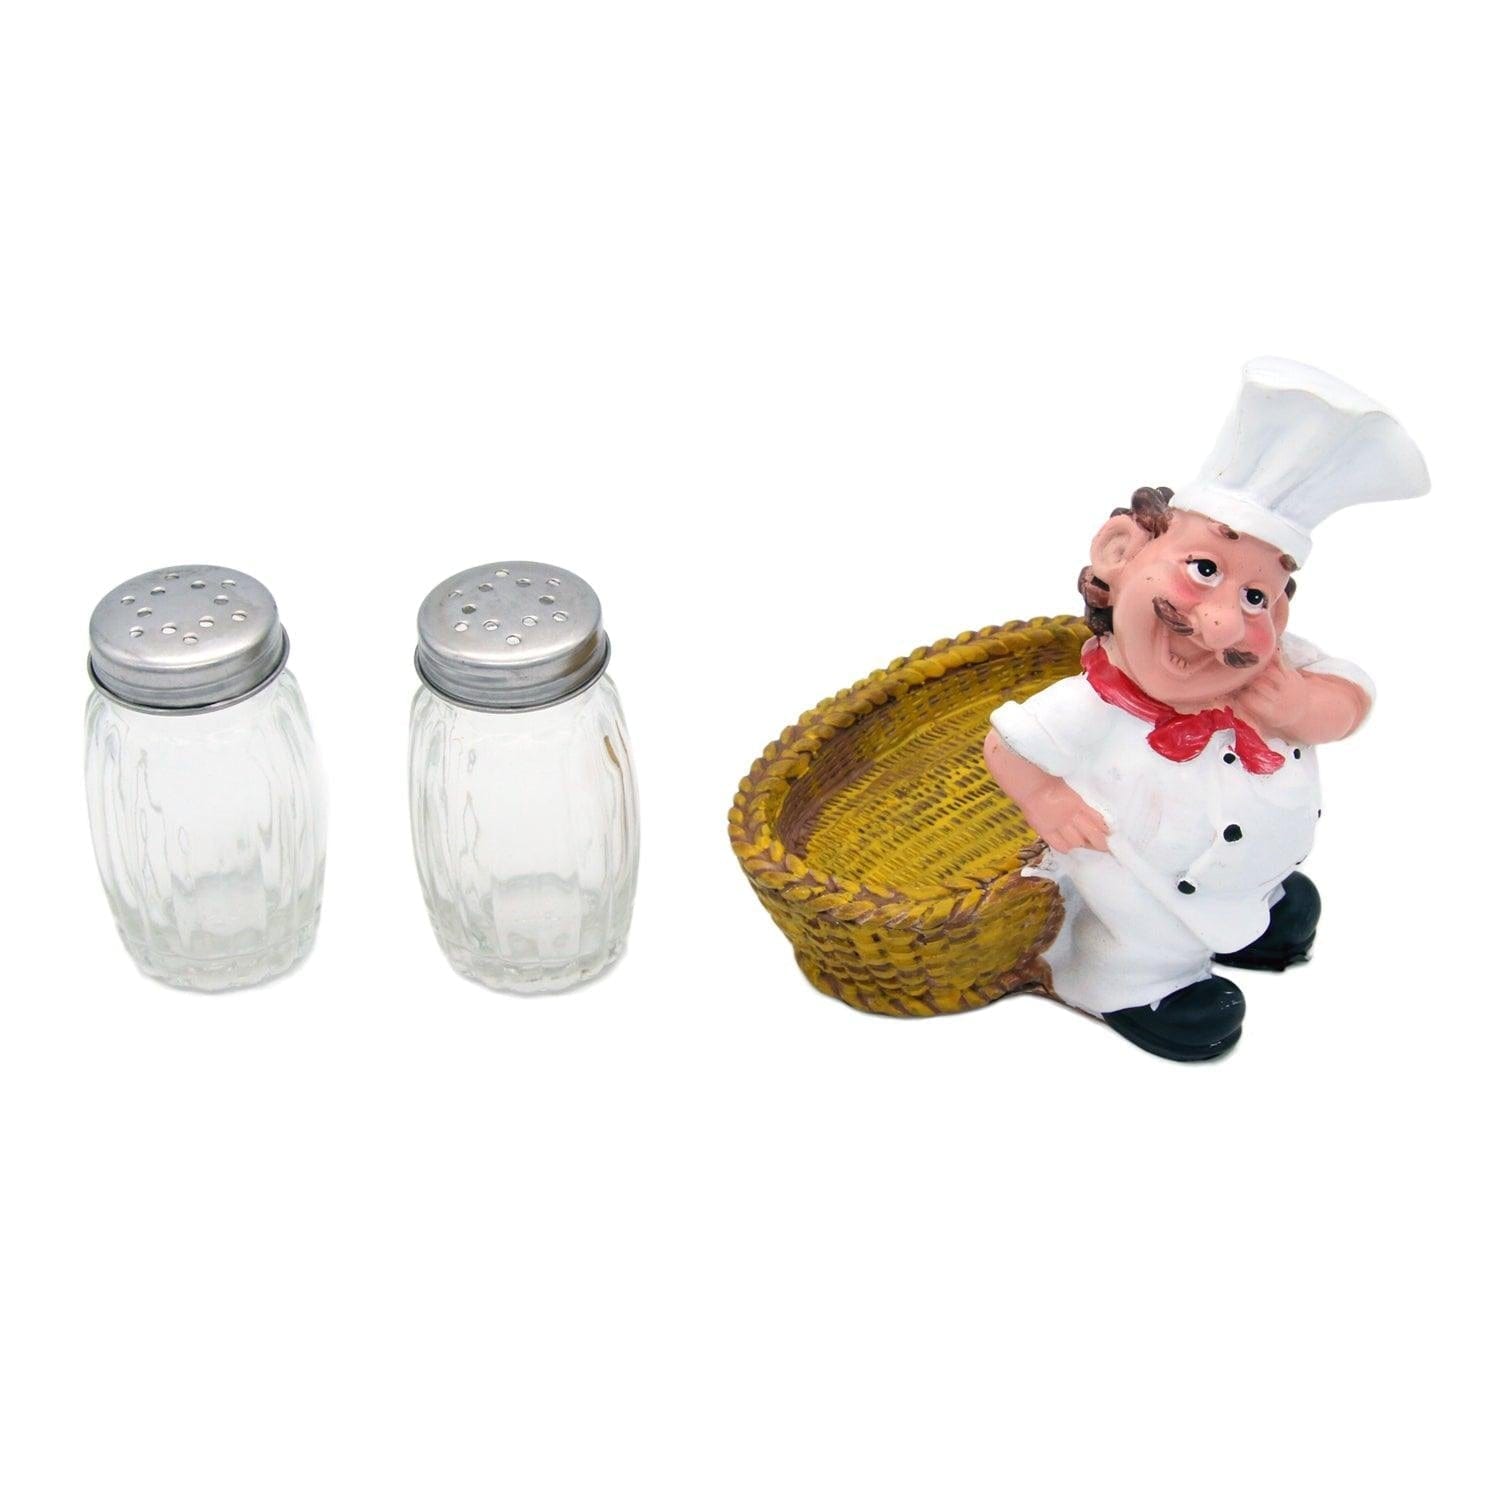 Foodie Chef Figurine Resin Salt & Pepper Shakers in Cane Basket Holder Set